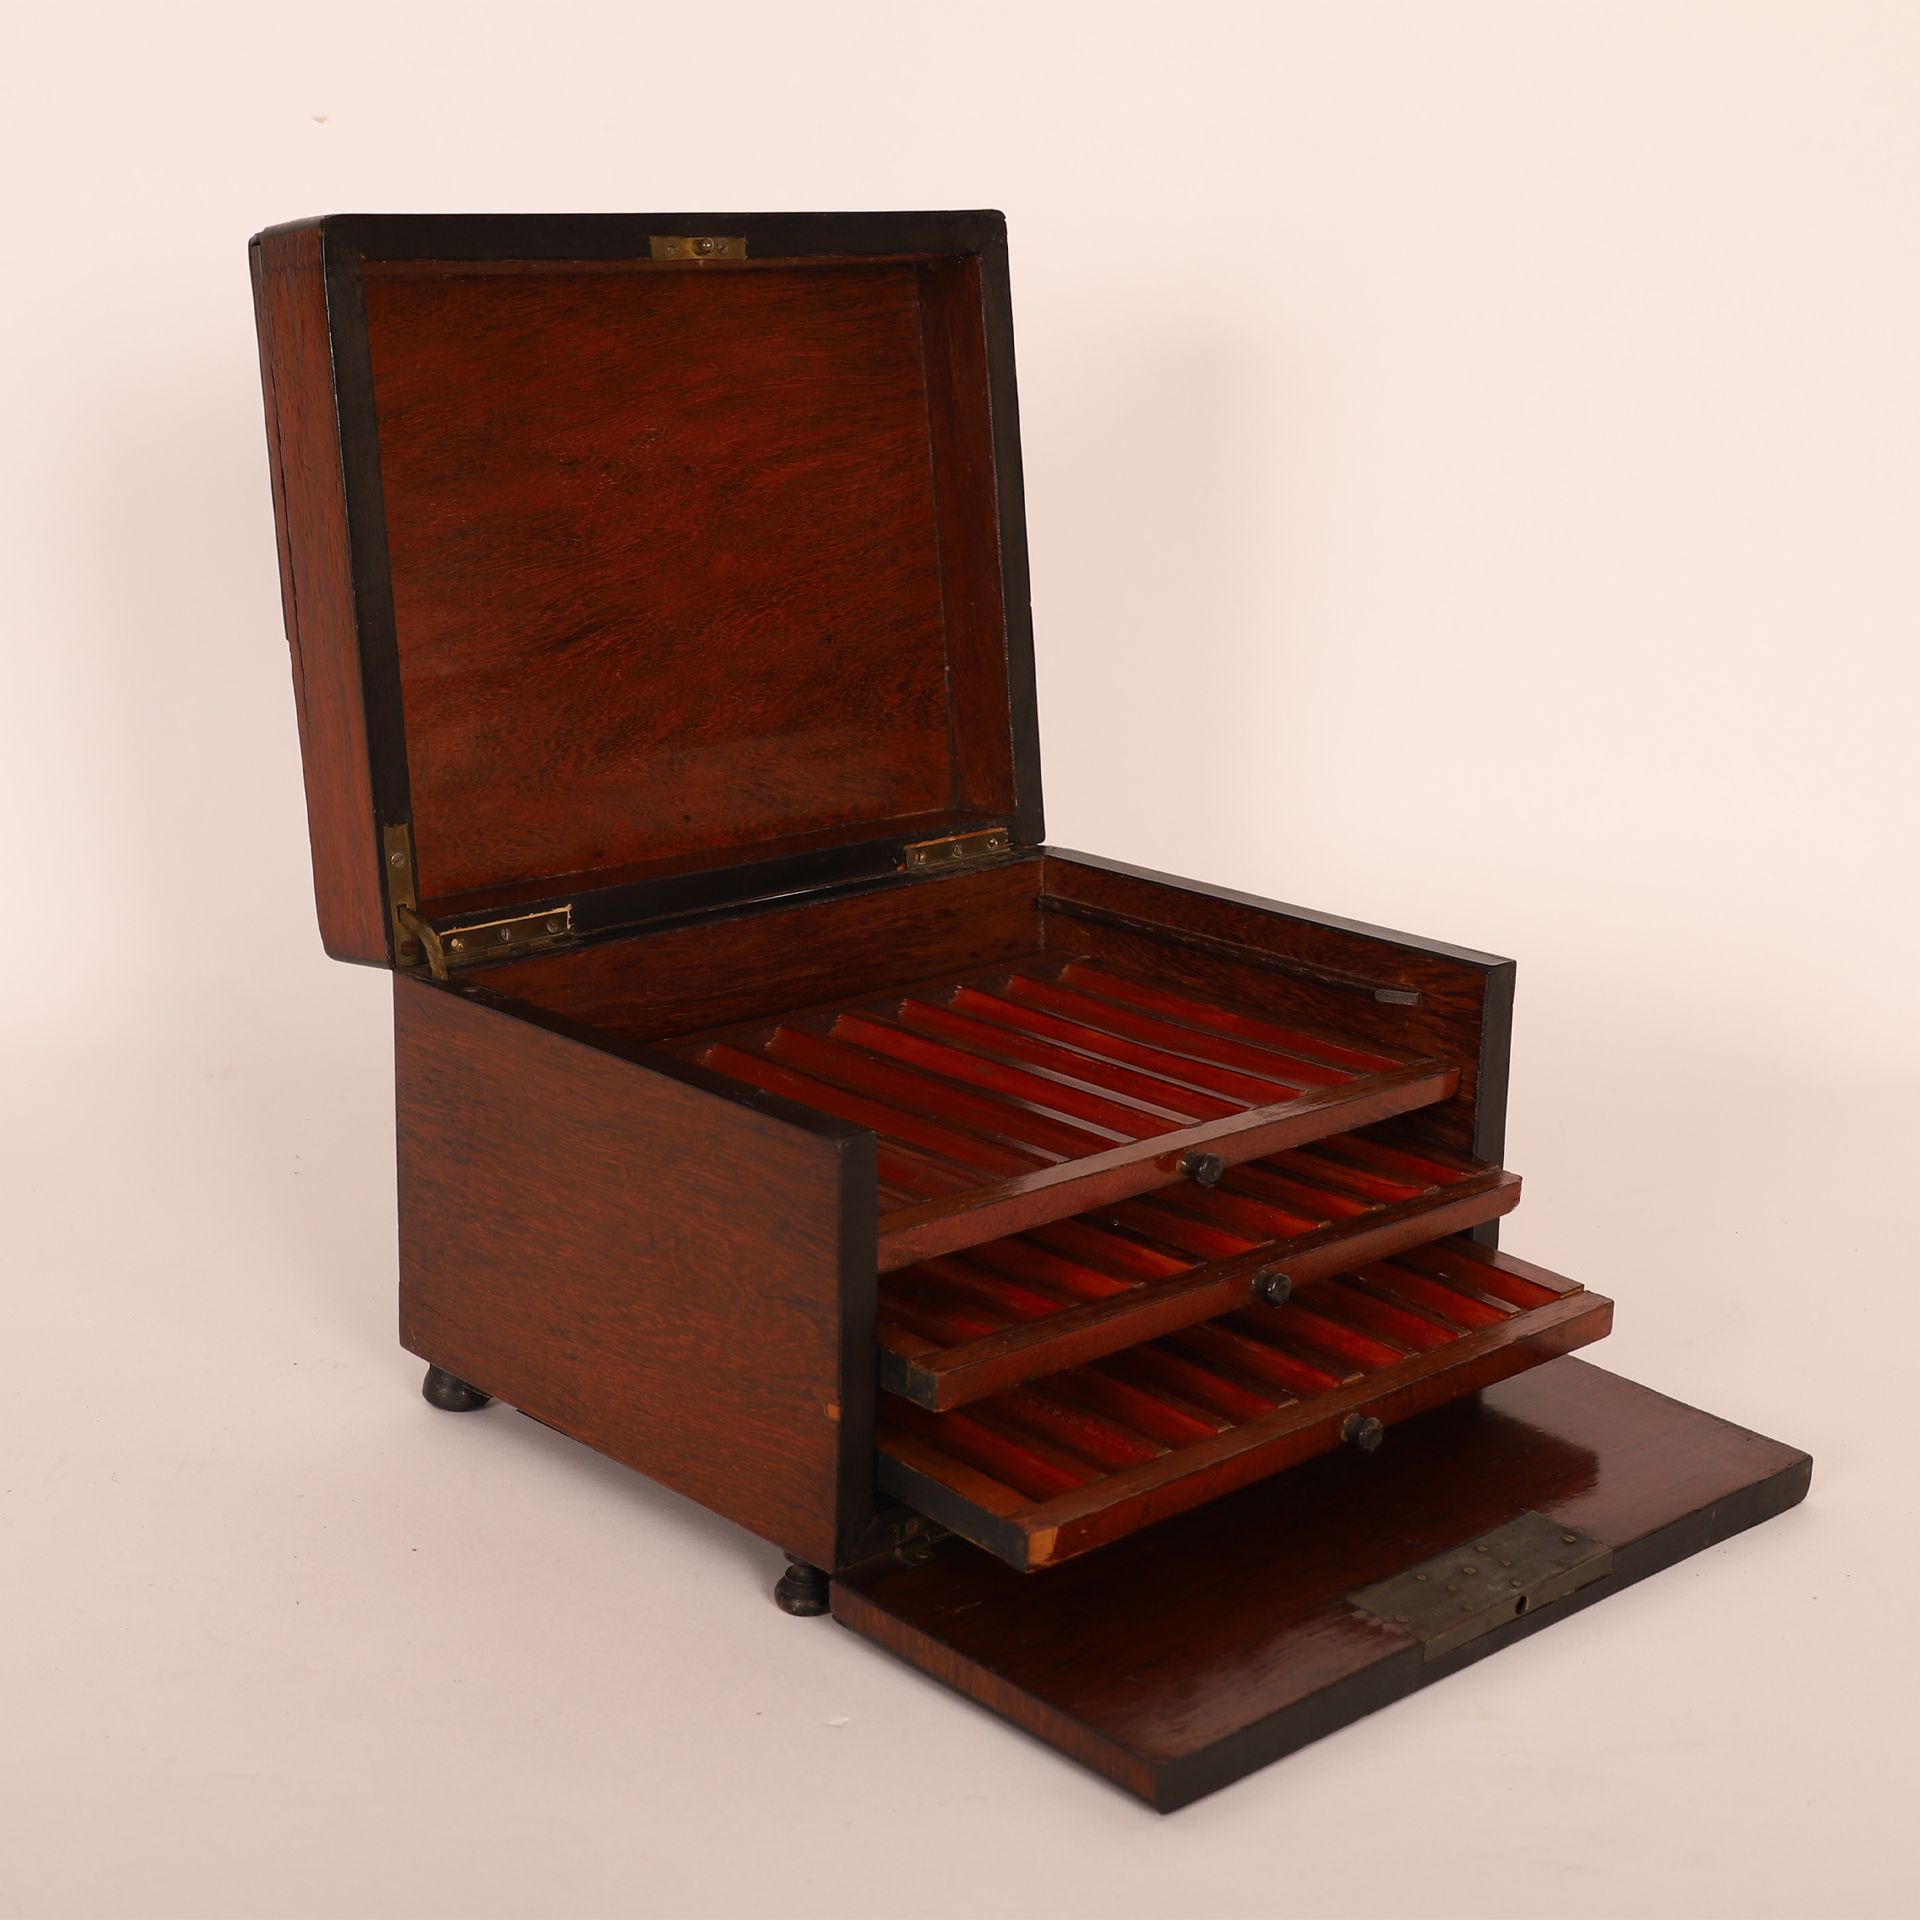 Null 桃花心木和珍珠母镶嵌的雪茄盒

有9个隔间的Tirois

19世纪

15,5 x 23,5 x 19厘米

一个抽屉丢失，一个脚被替换，小事故